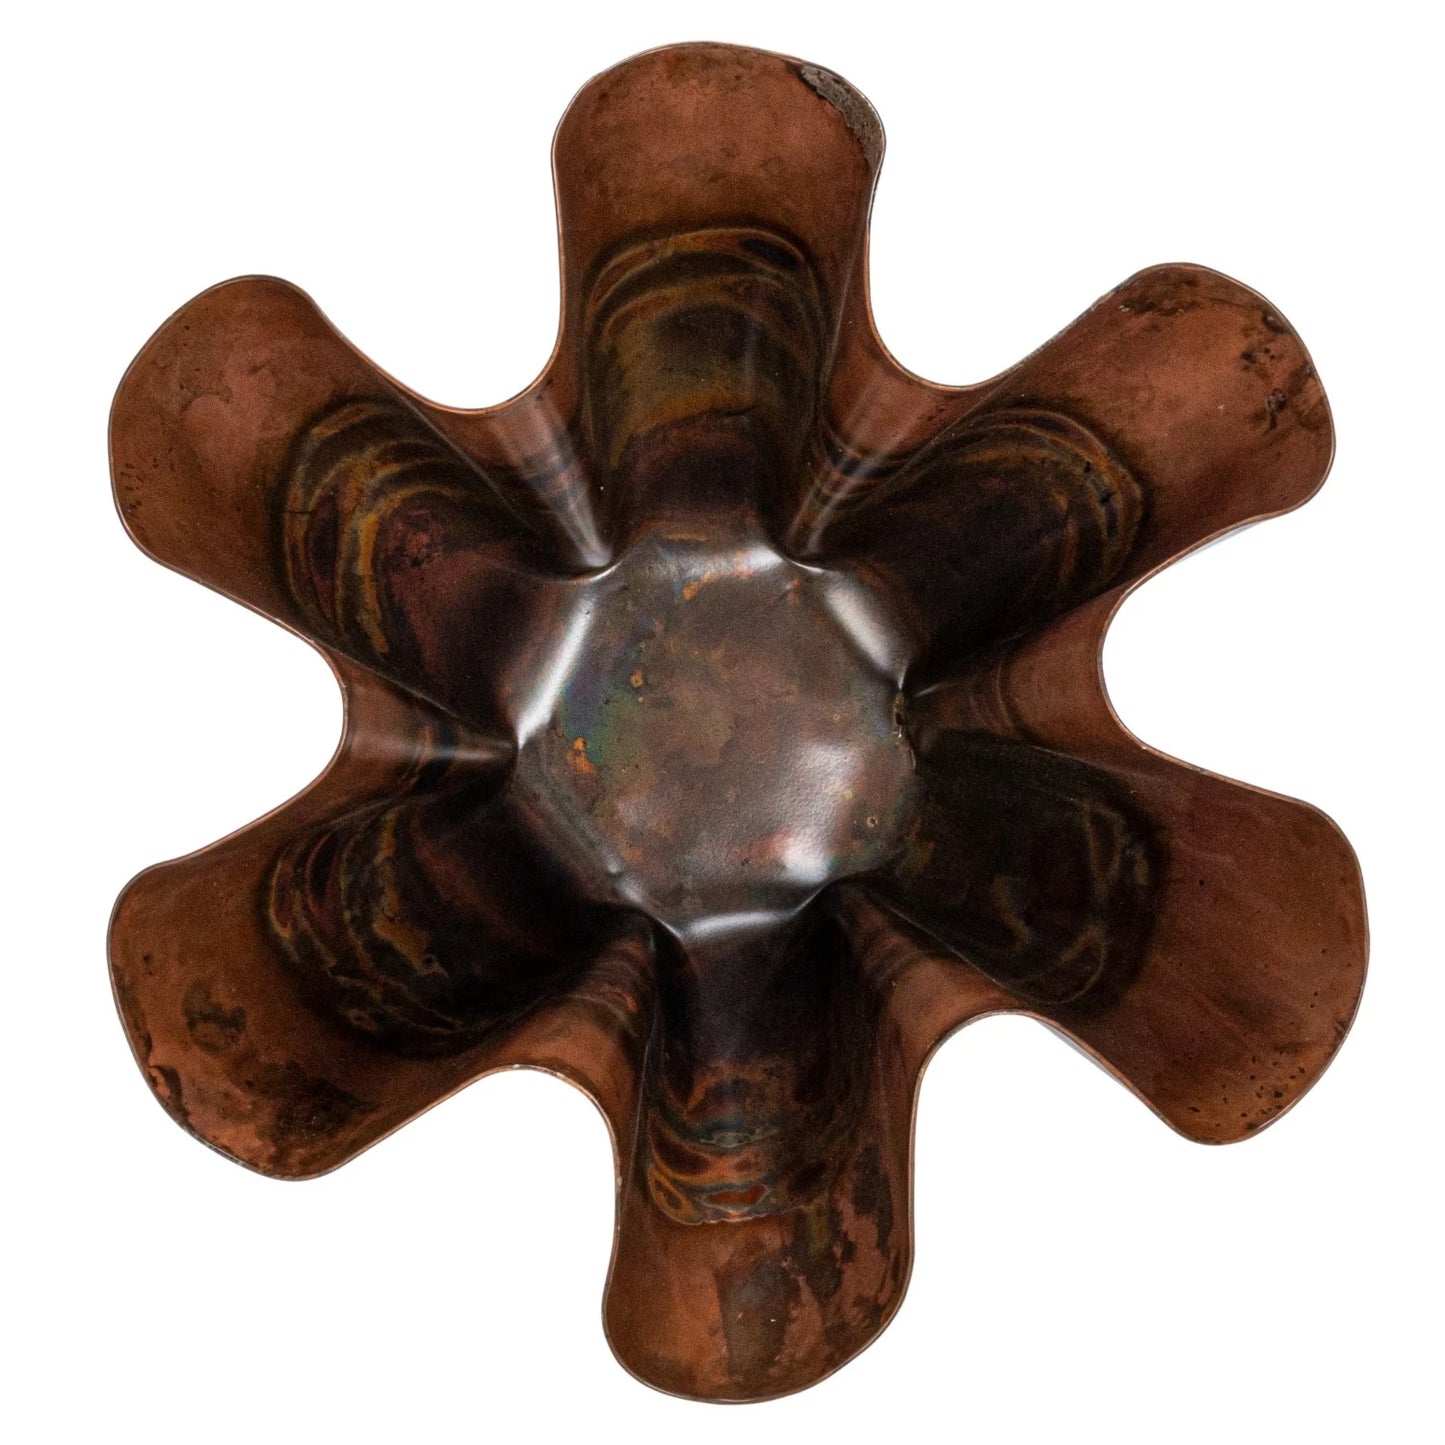 Metal Ruffled Bowl- Copper Finish